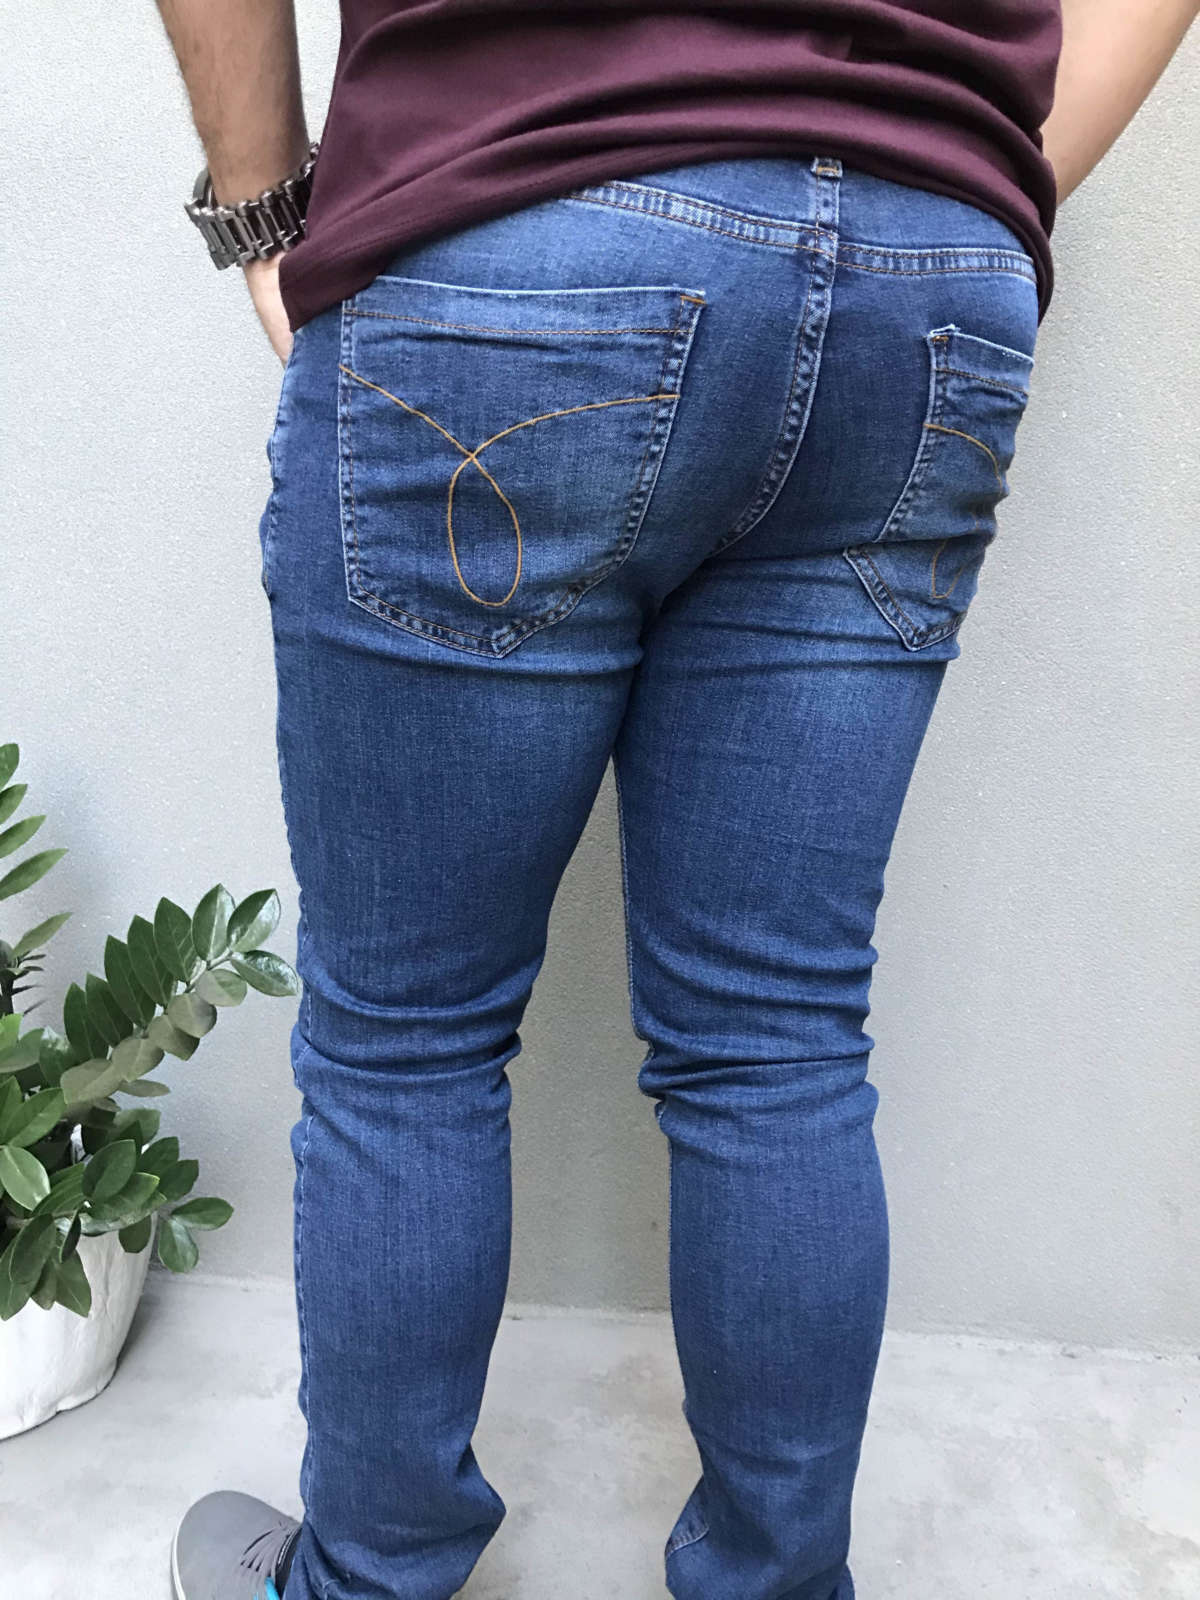 dardak jeans masculino